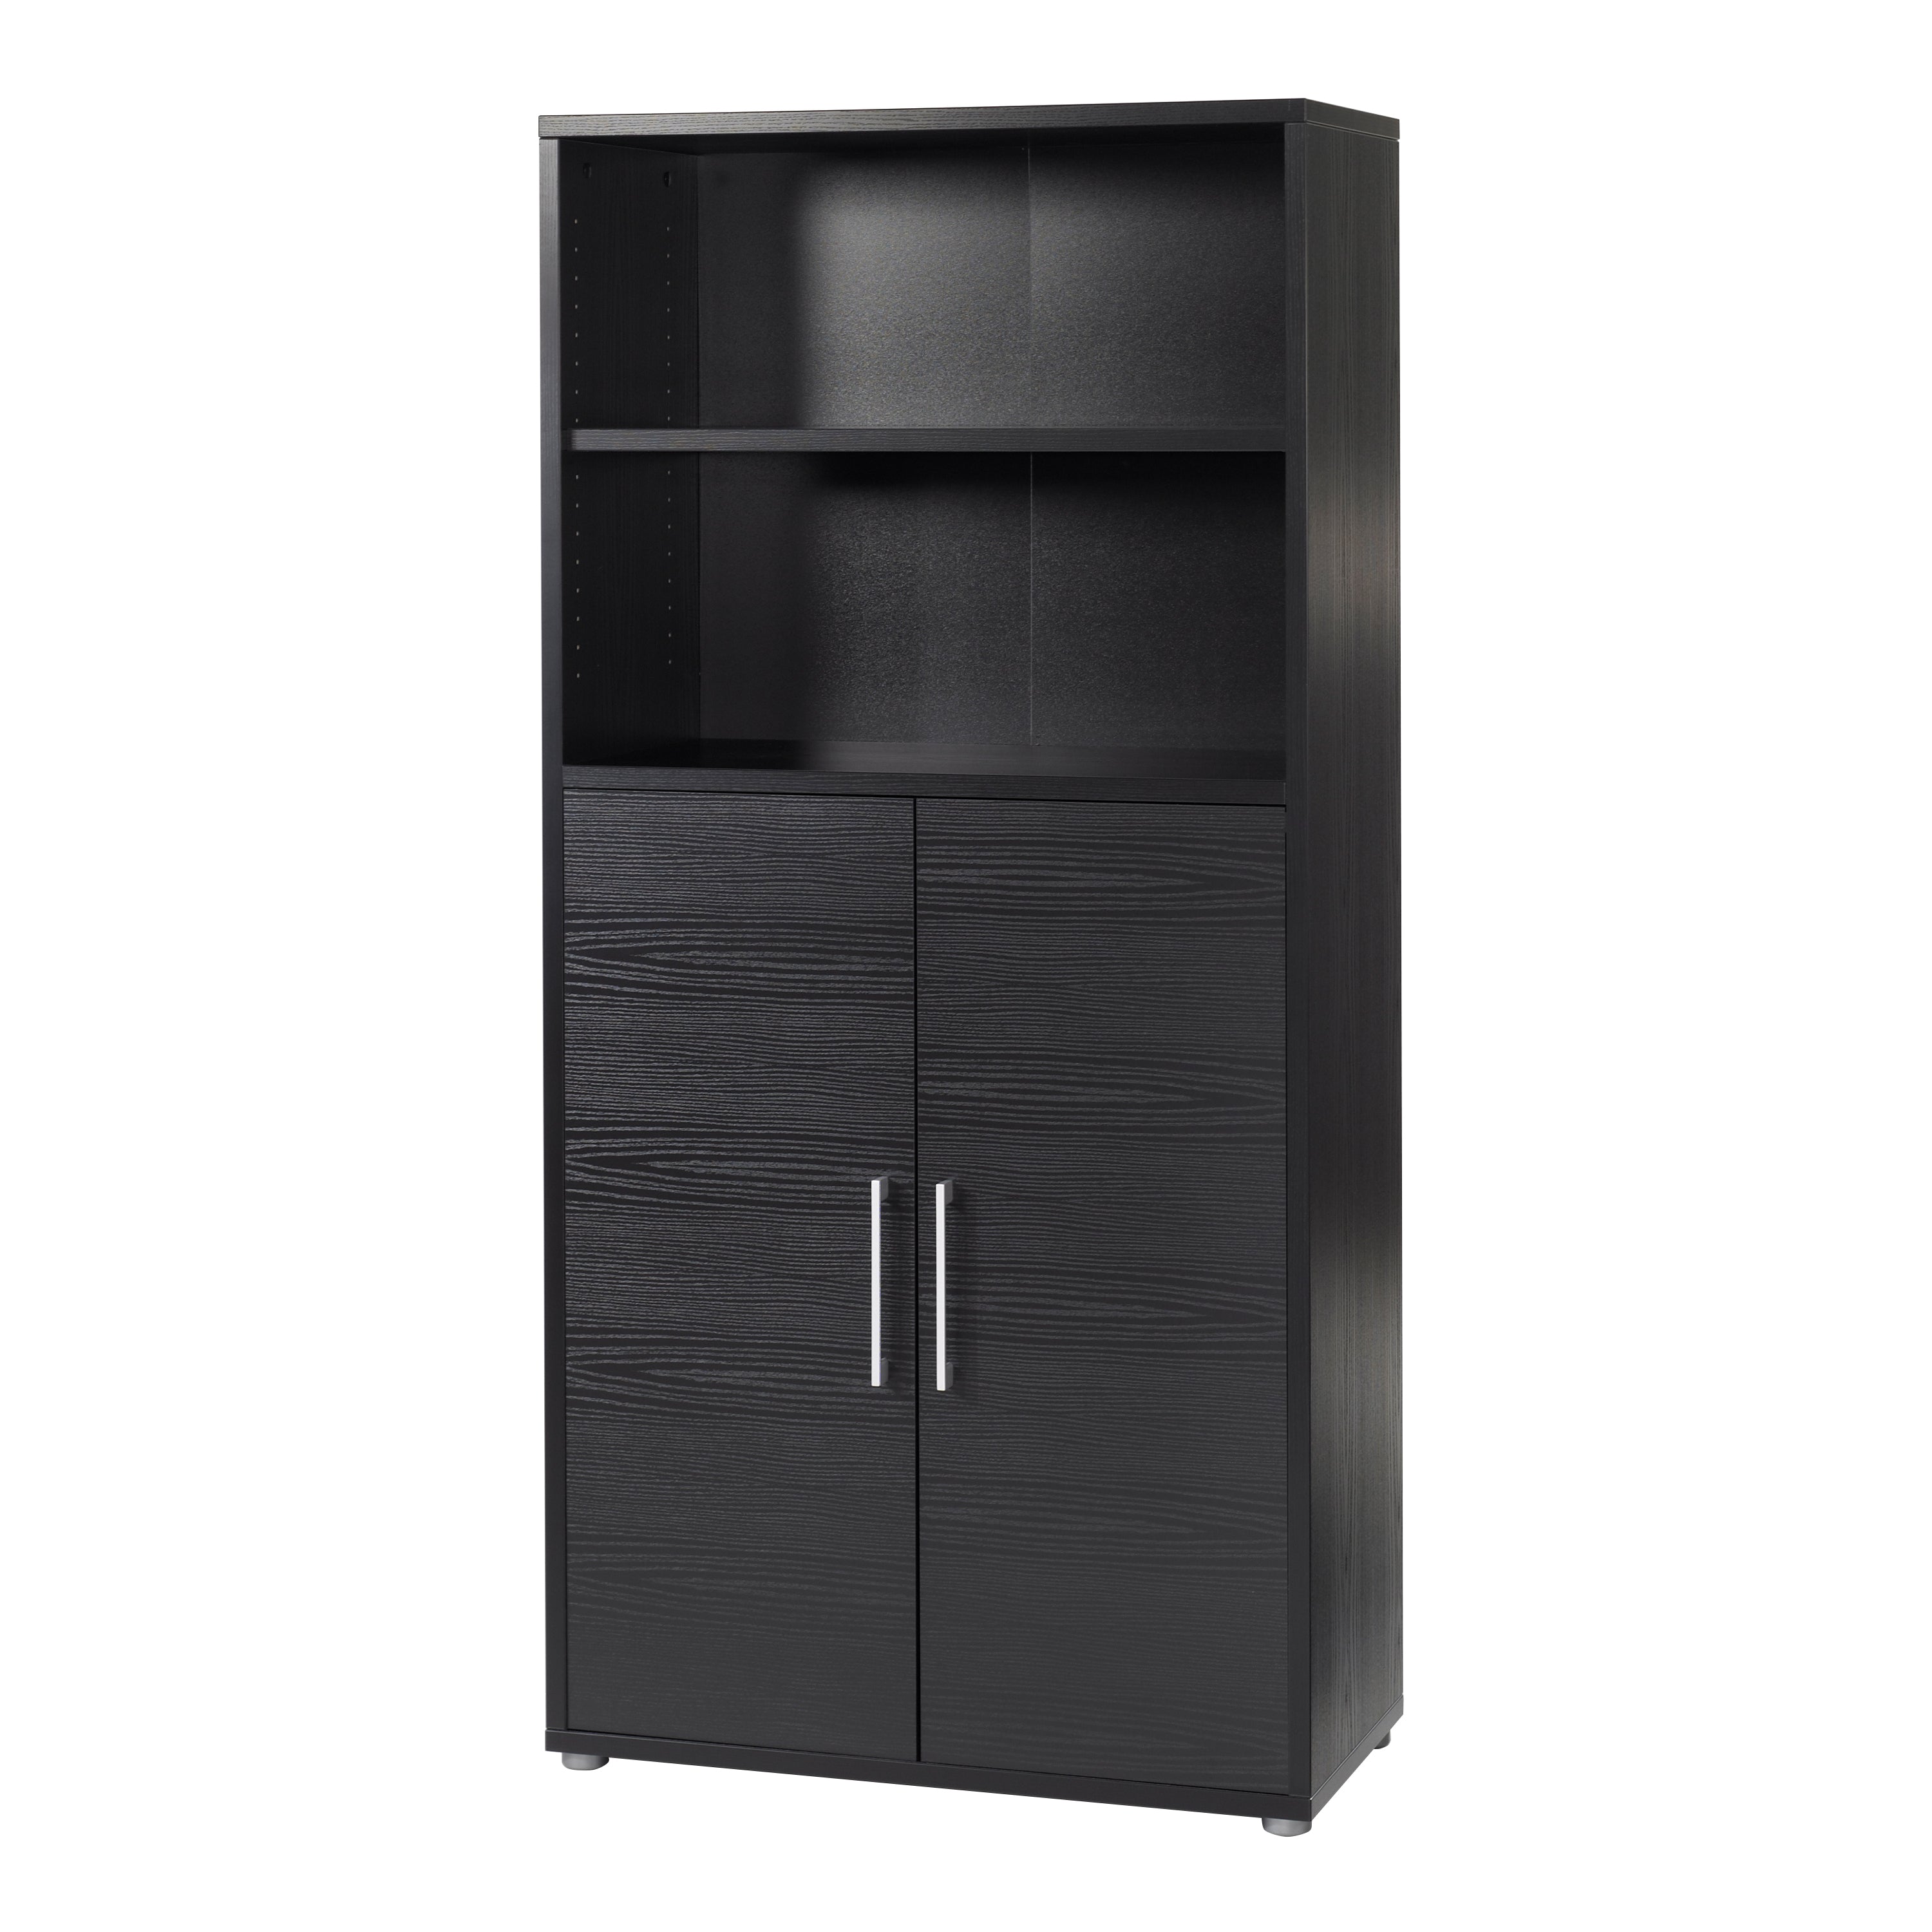 Prima Bookcase 3 Shelves with 2 Doors in Black woodgrain